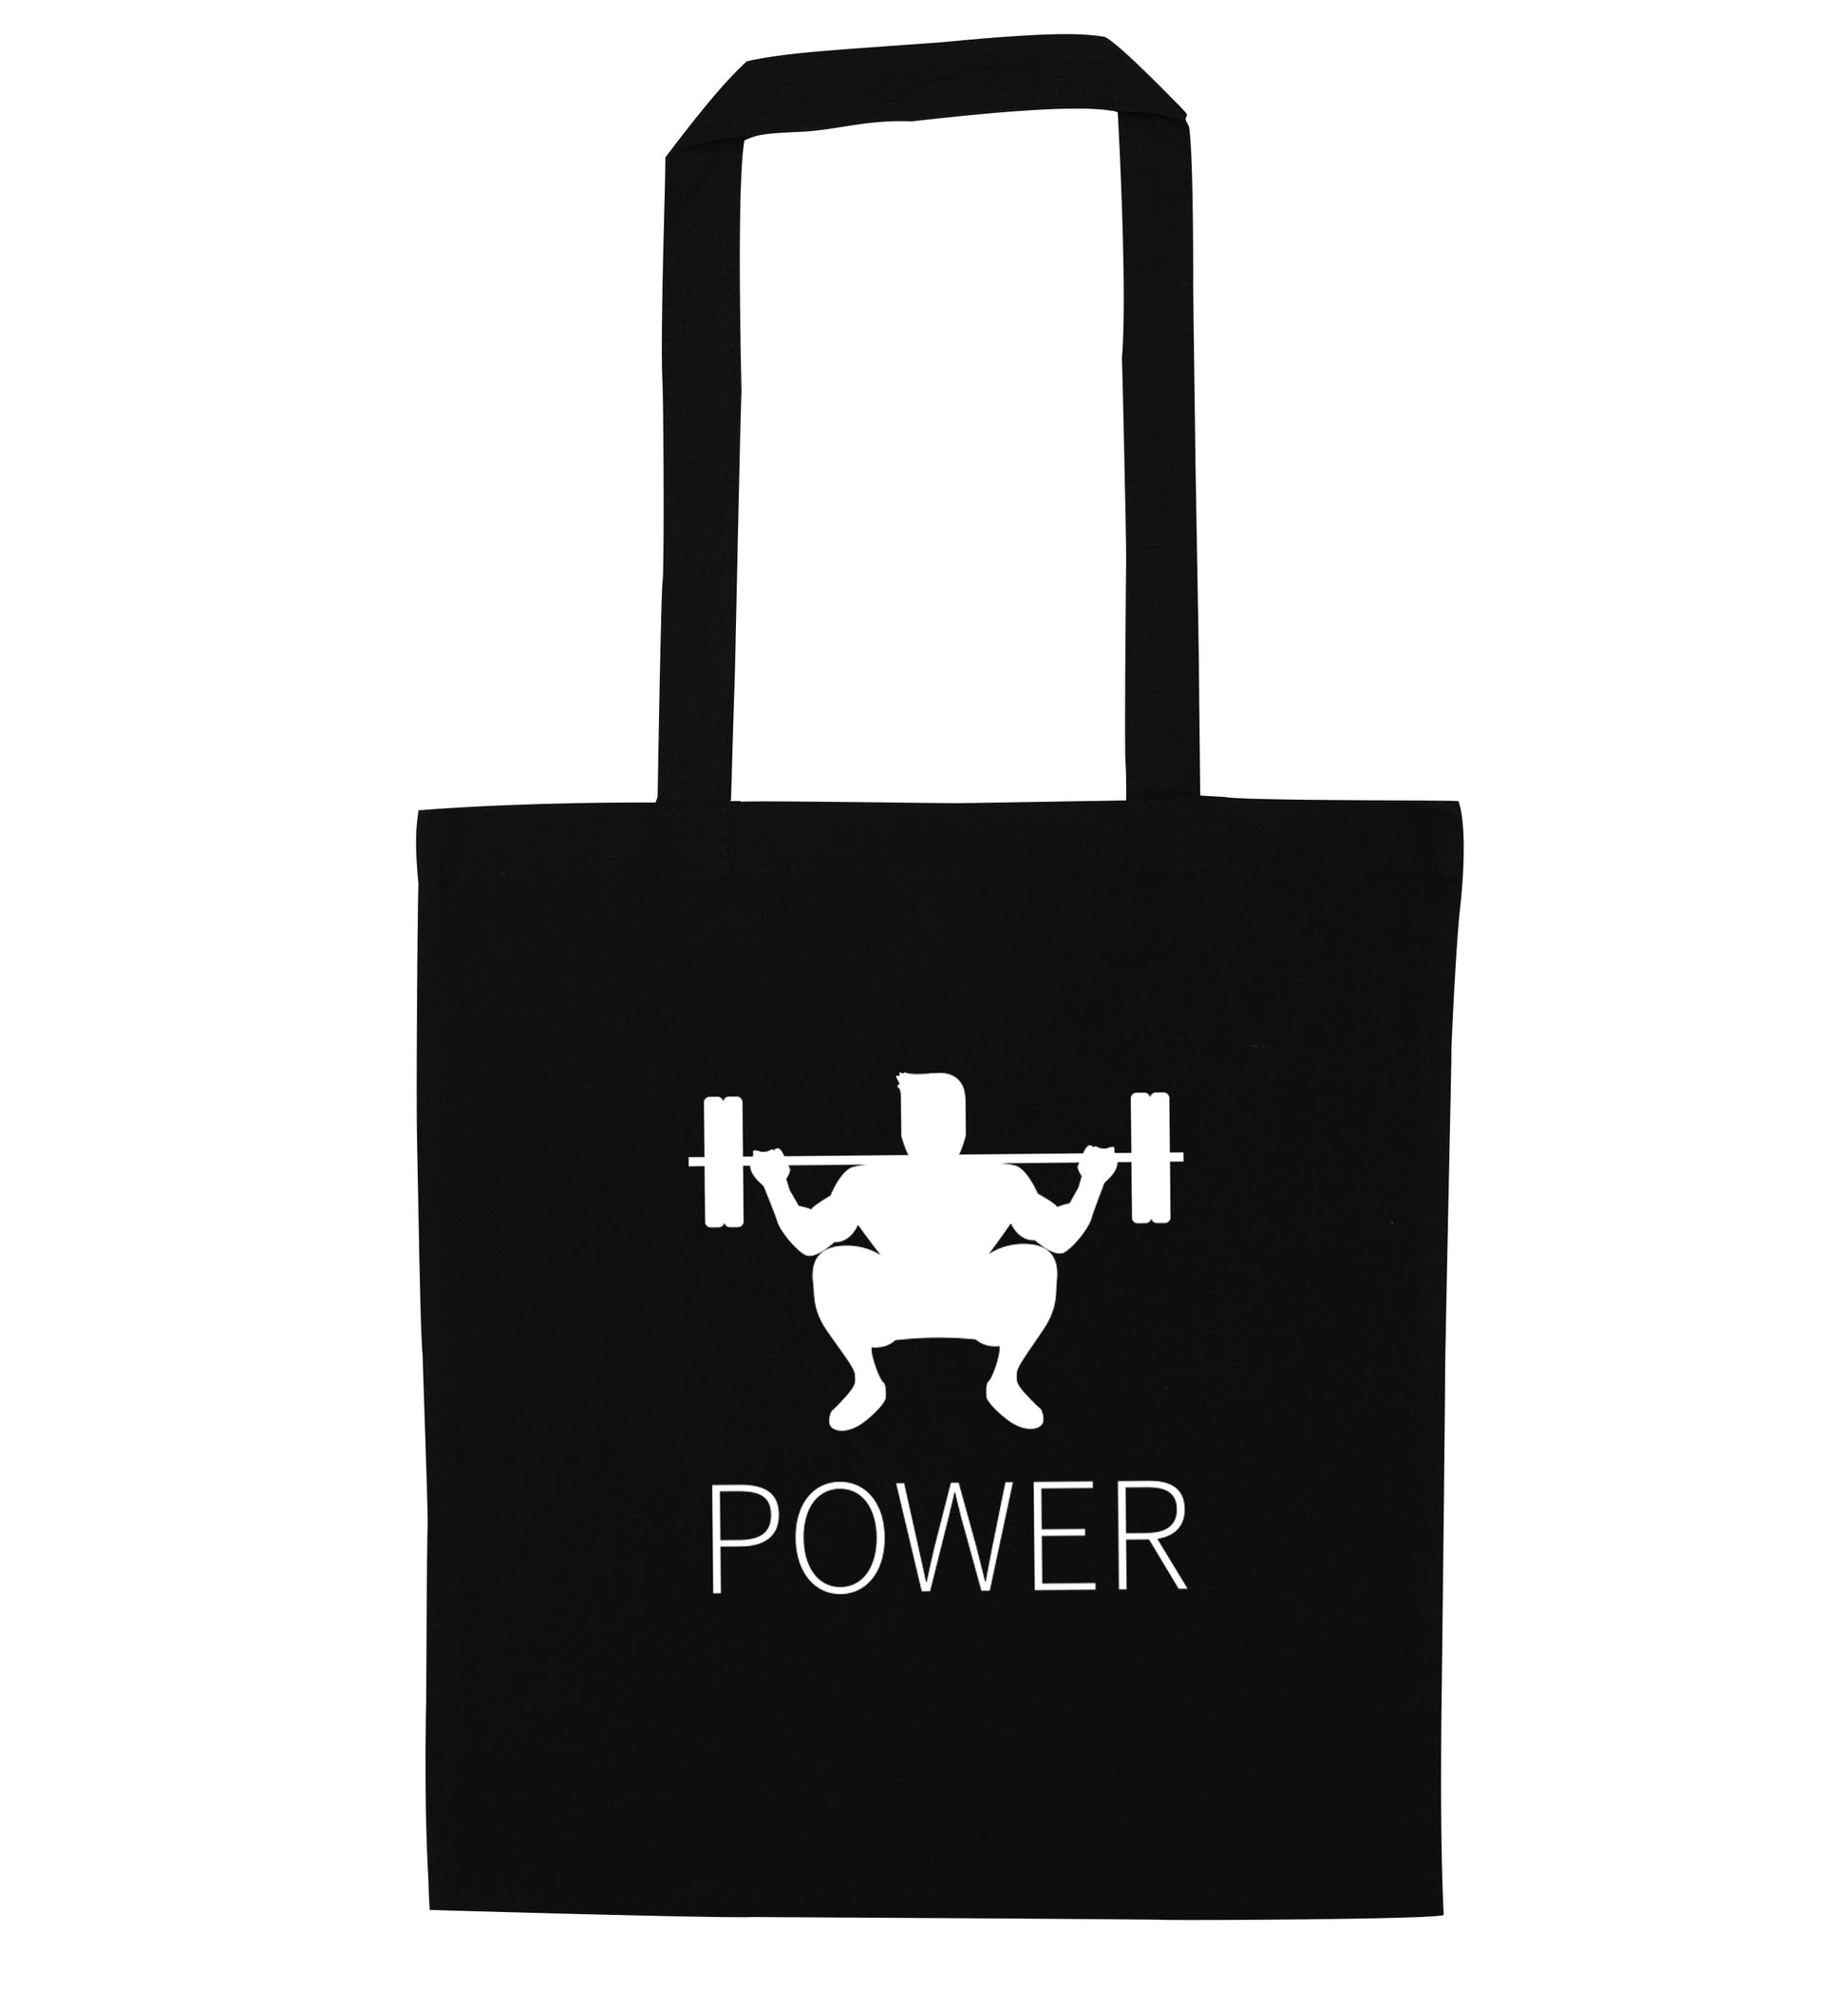 Lift power black tote bag